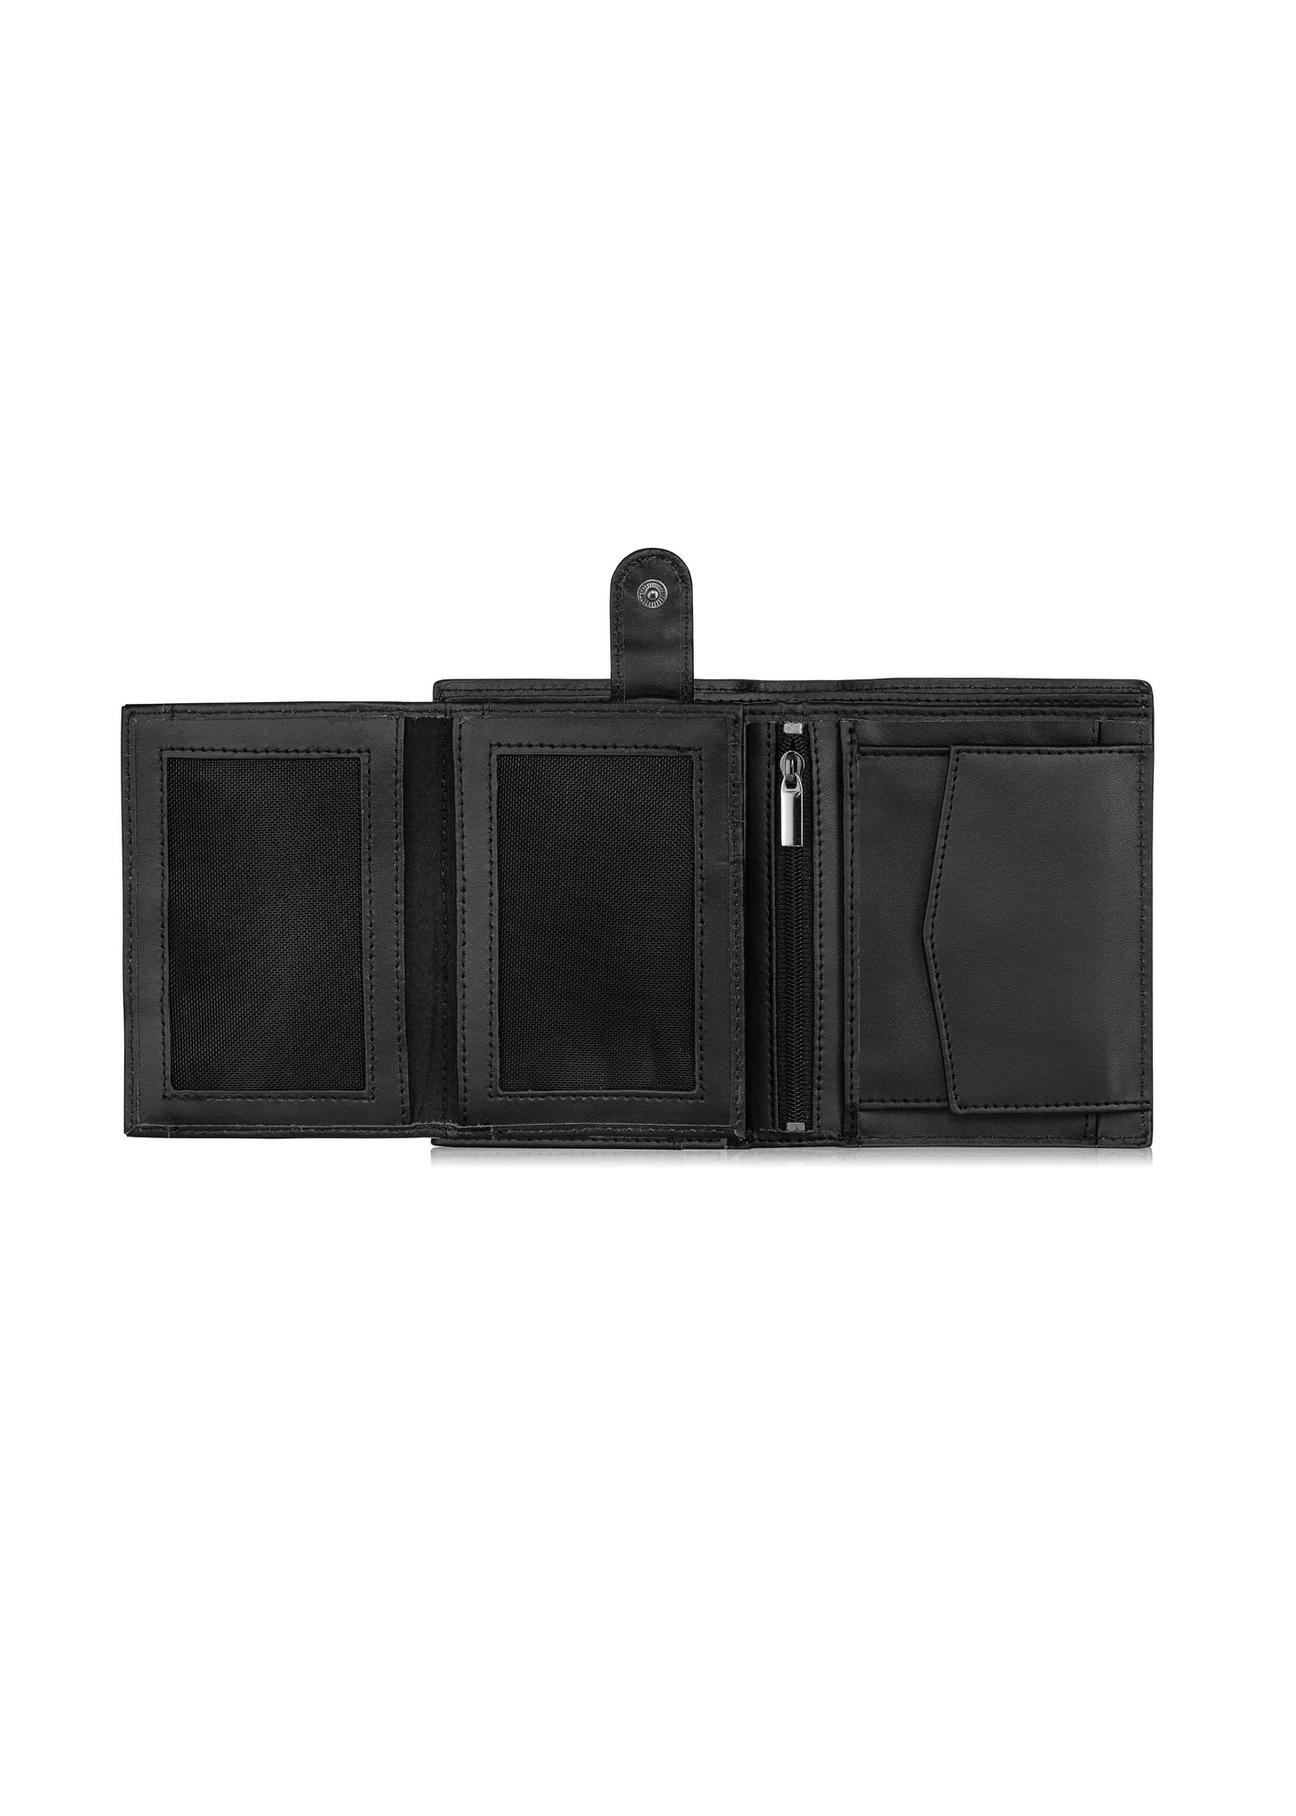 Skórzany czarny portfel męski z monogramem PORMS-0600-98(Z23)